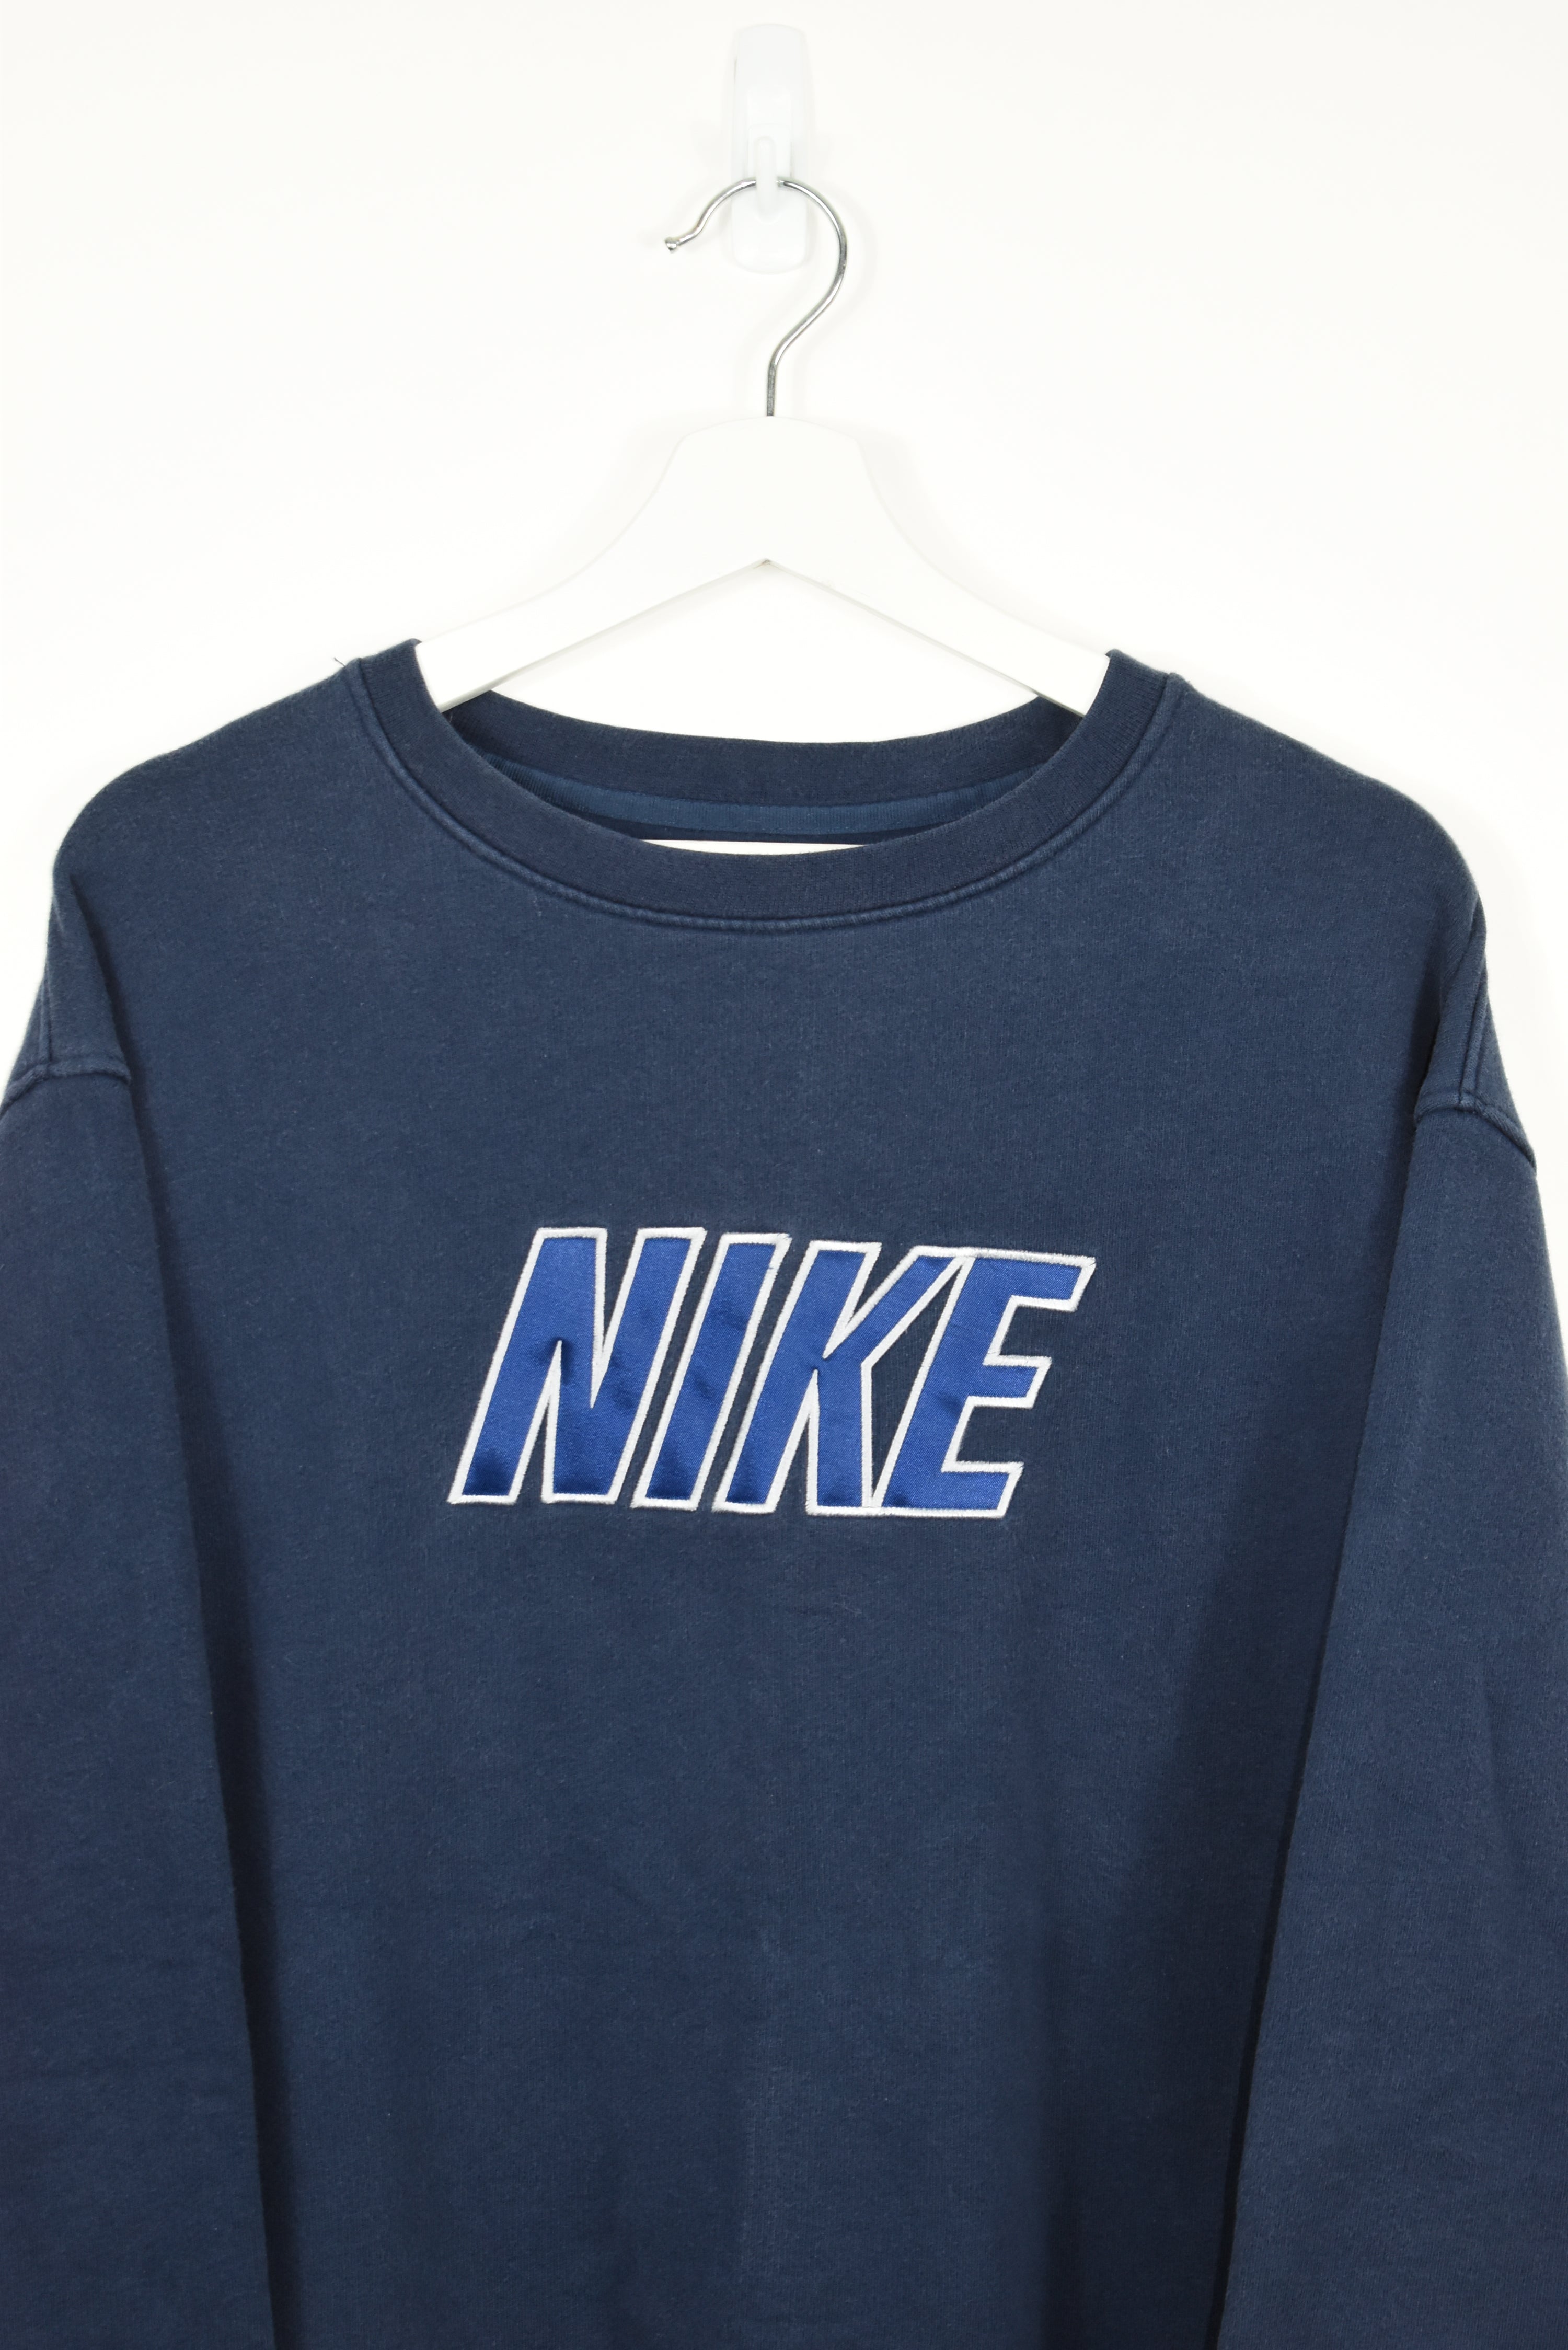 Vintage Nike Embroidery Spellout Sweatshirt XLARGE